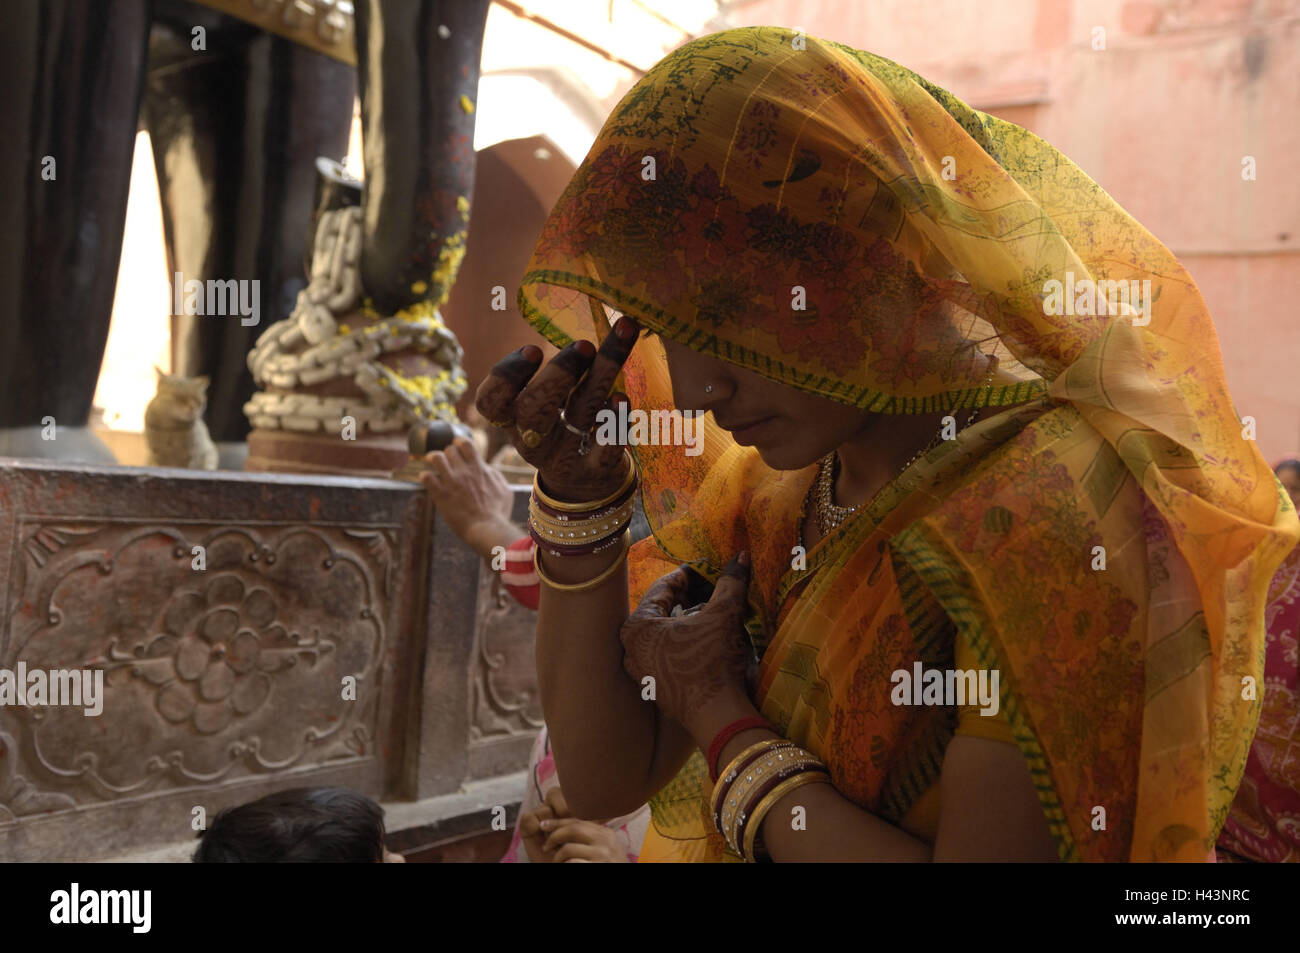 Indian, gesture, Bindi, attach, no model release, Stock Photo